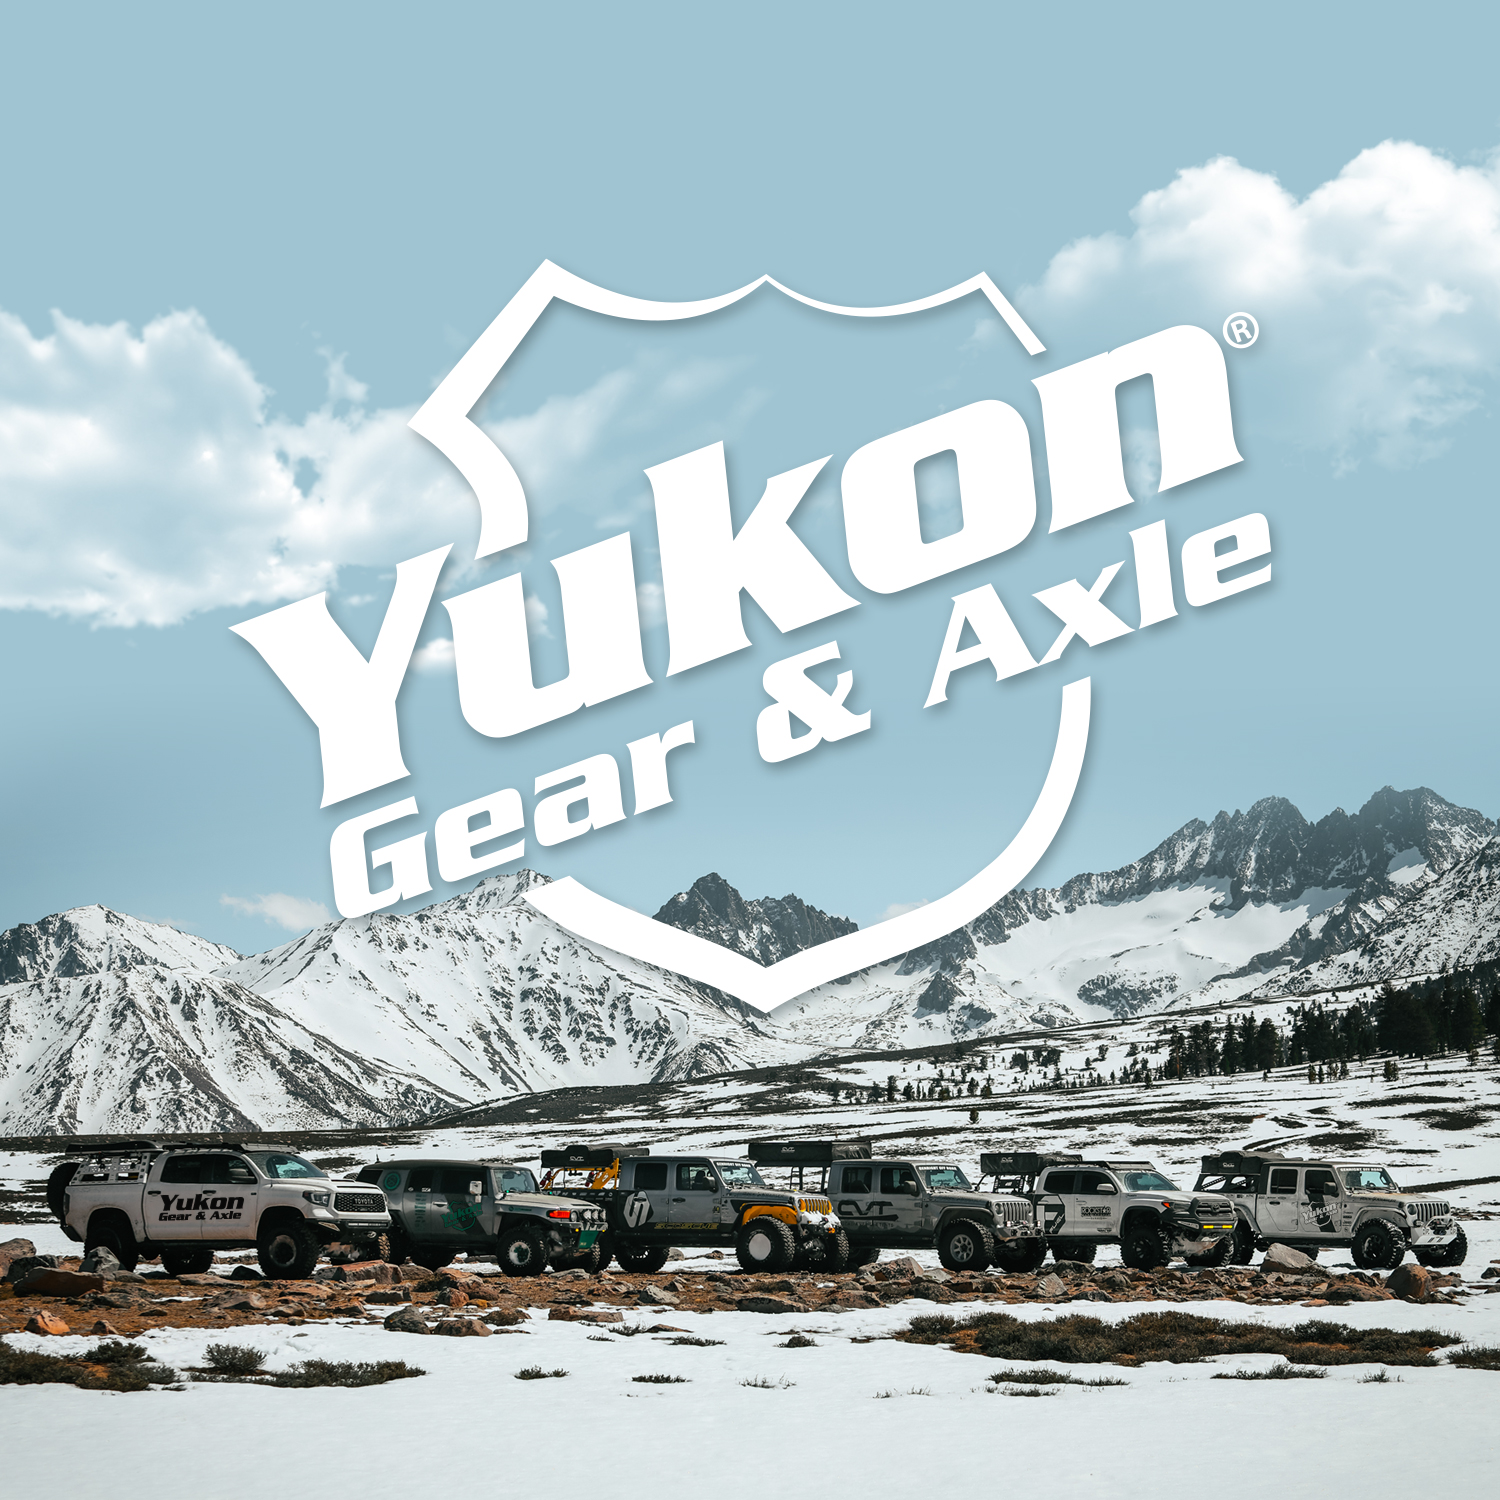 Yukon high performance Ring & Pinion set, 2010-down Chrysler 9.25", 3.55 ratio 